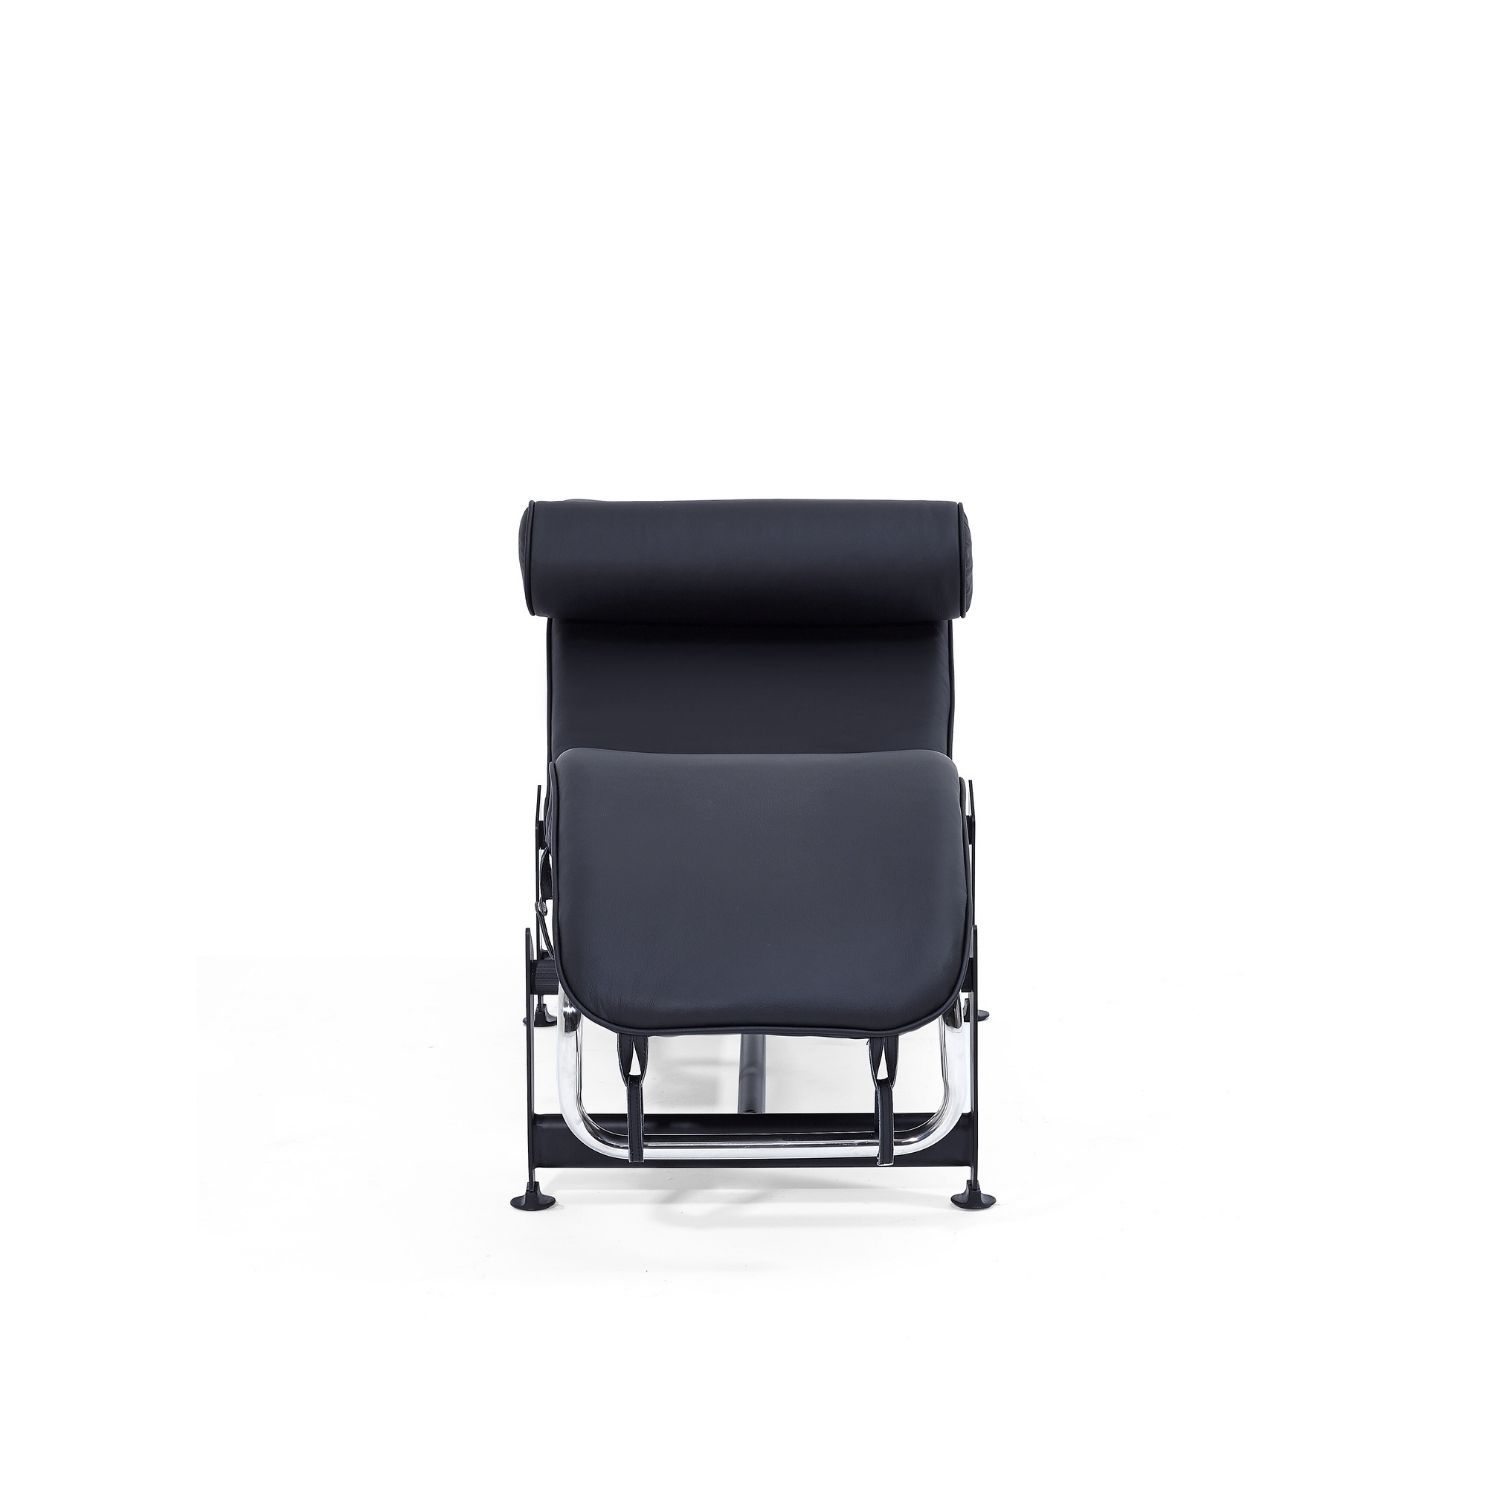 Malia Chaise Lounge Chair - Valyou 